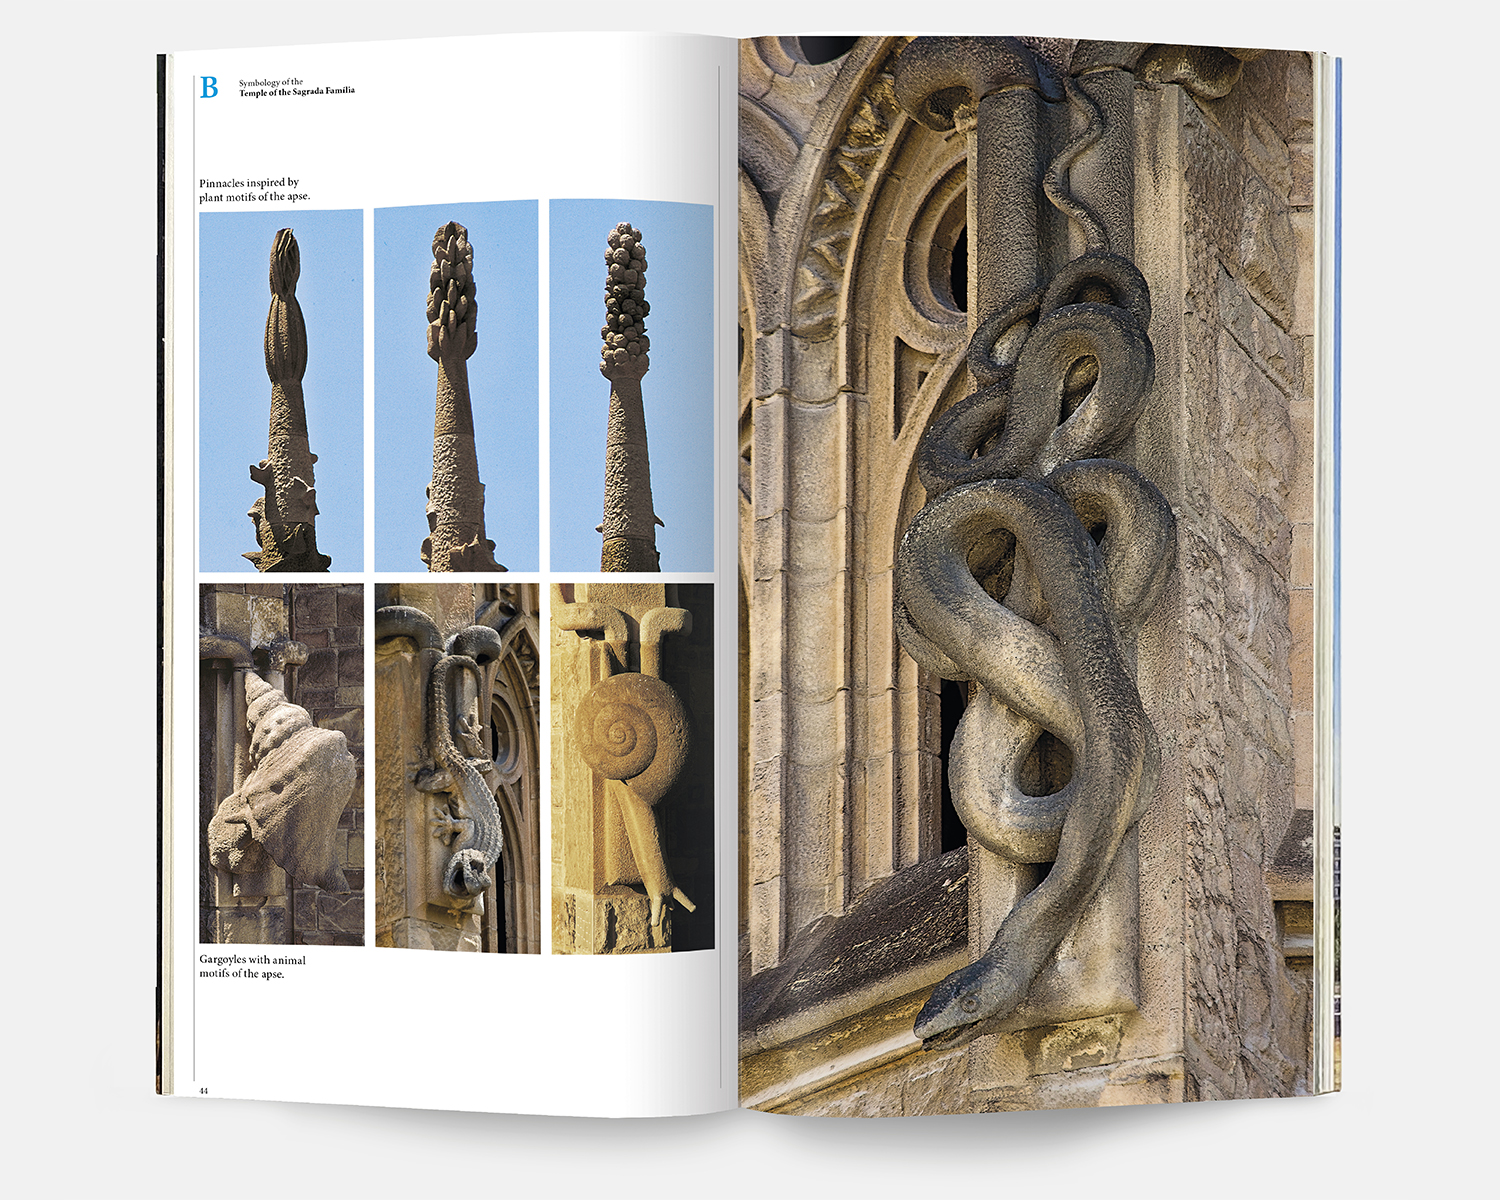 Simbologia del Temple de la Sagrada Família ssf 4